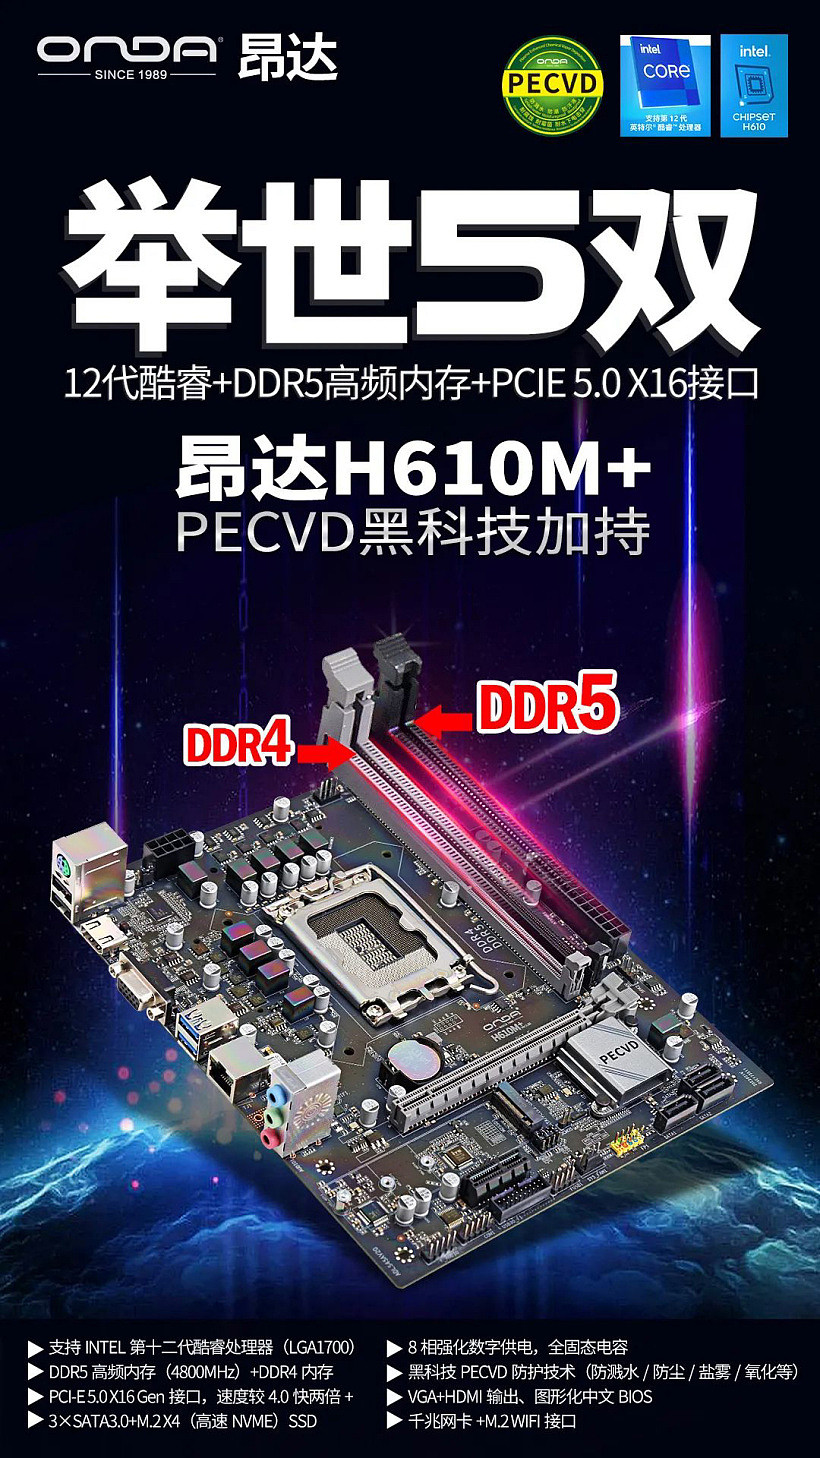 昂达推出奇葩 H610 主板：搭载 DDR4 + DDR5 双插槽 - 1